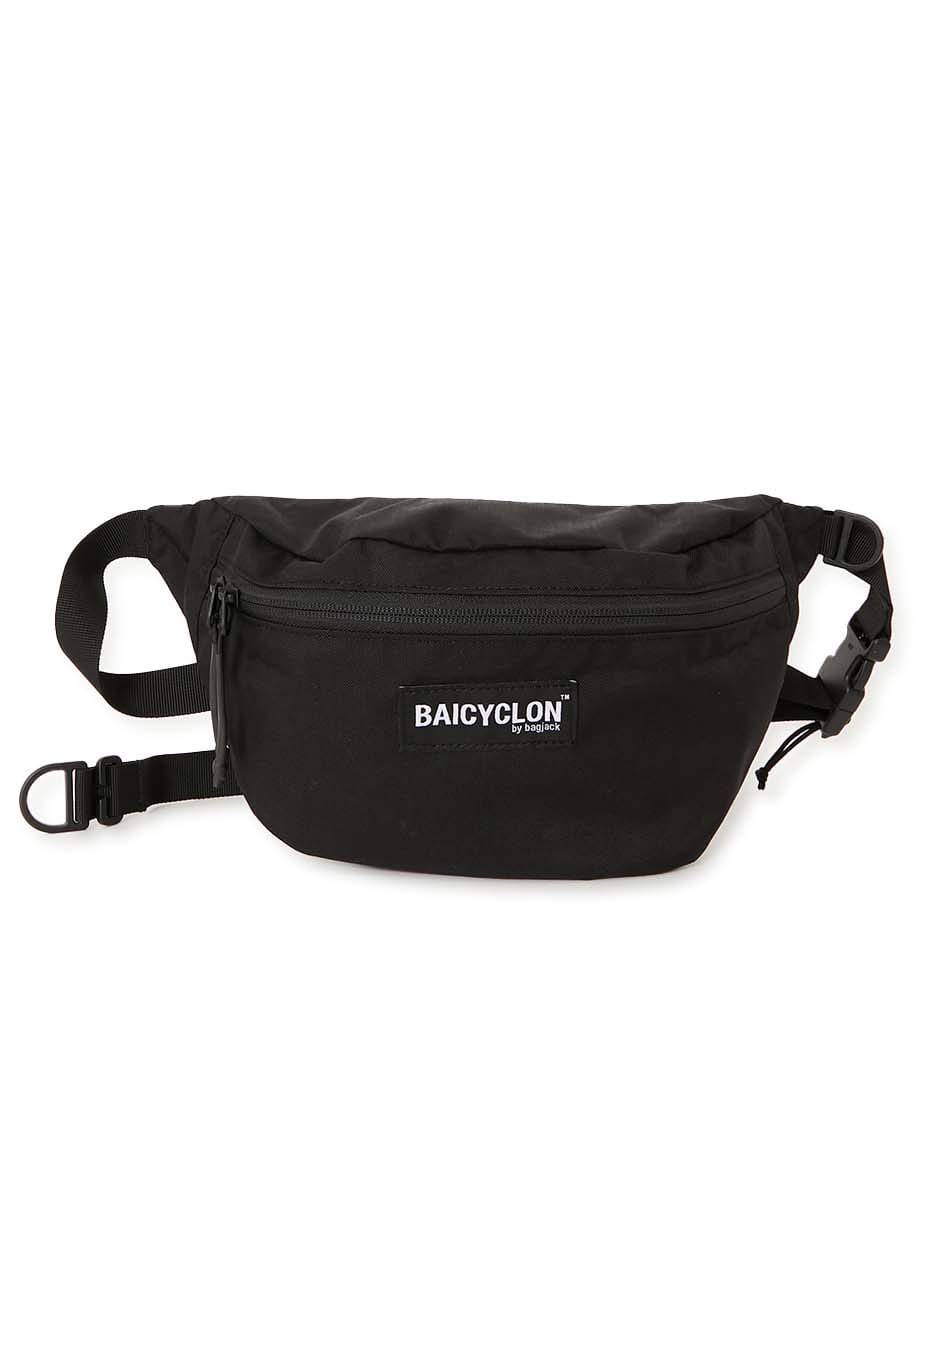 BAICYCLON by bagjack waist bag BCL-03